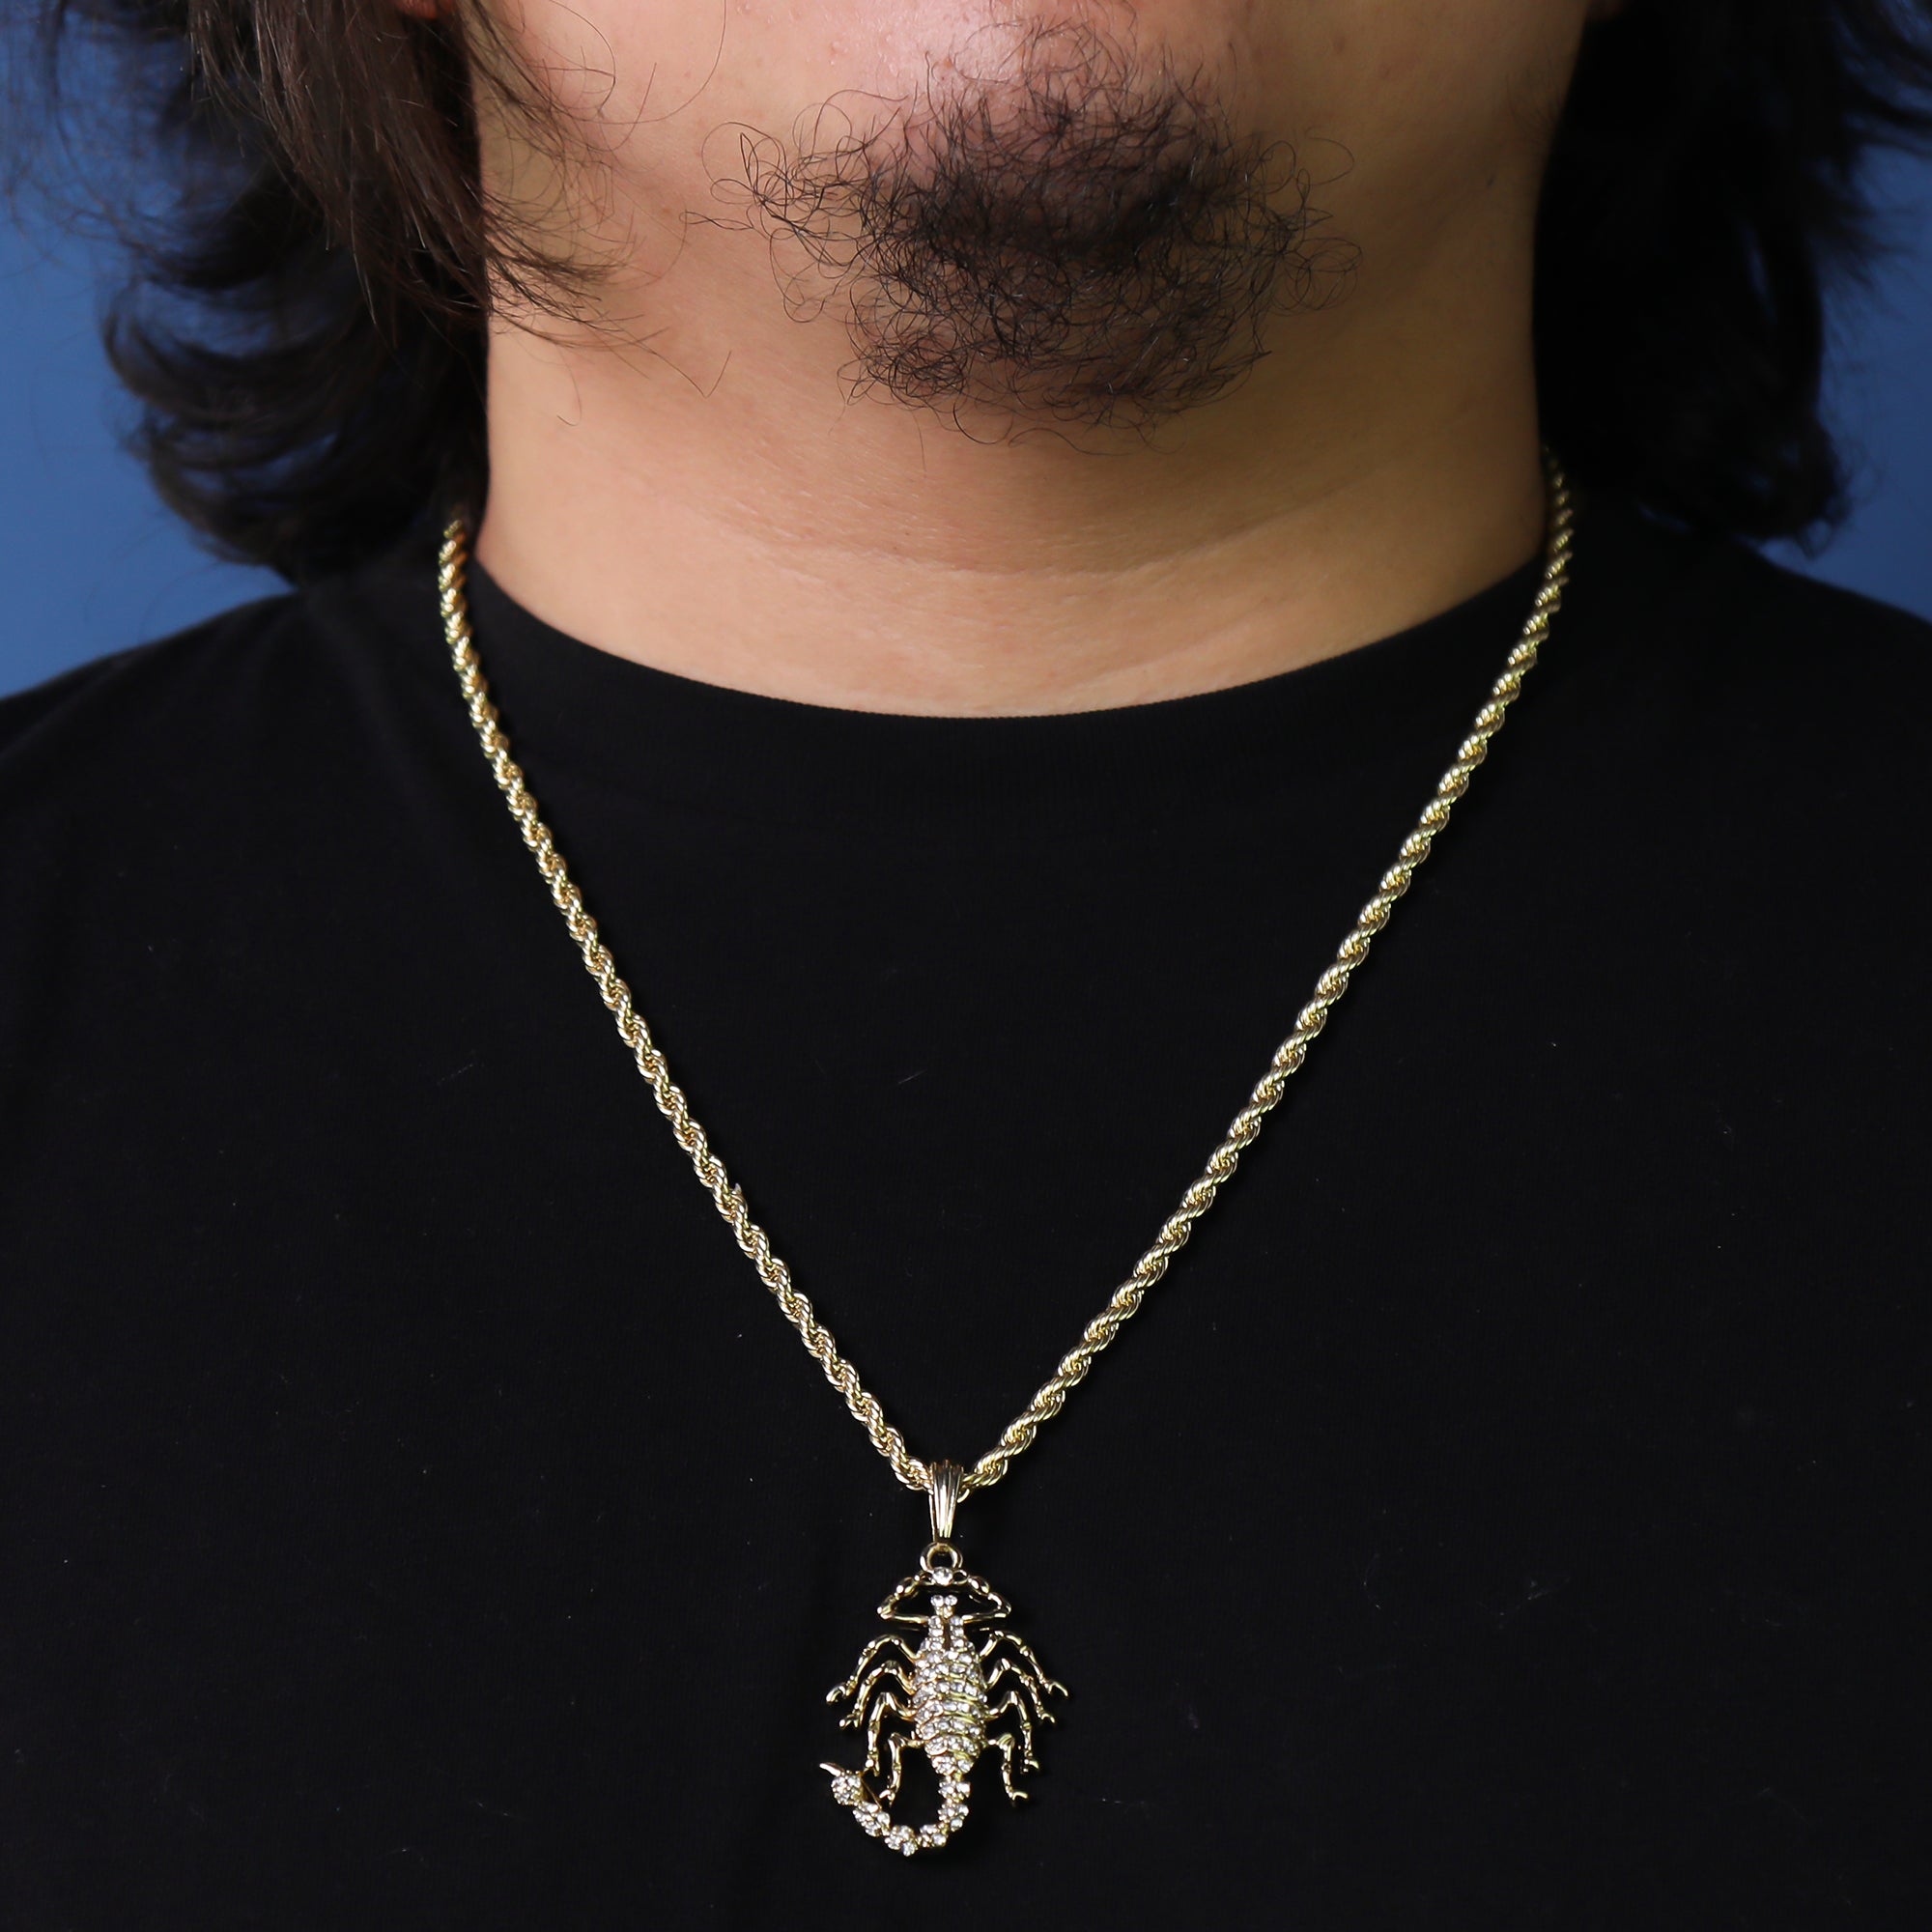 Cz Scorpion Pendant 24" Rope Chain Hip Hop 18k Jewelry Necklace